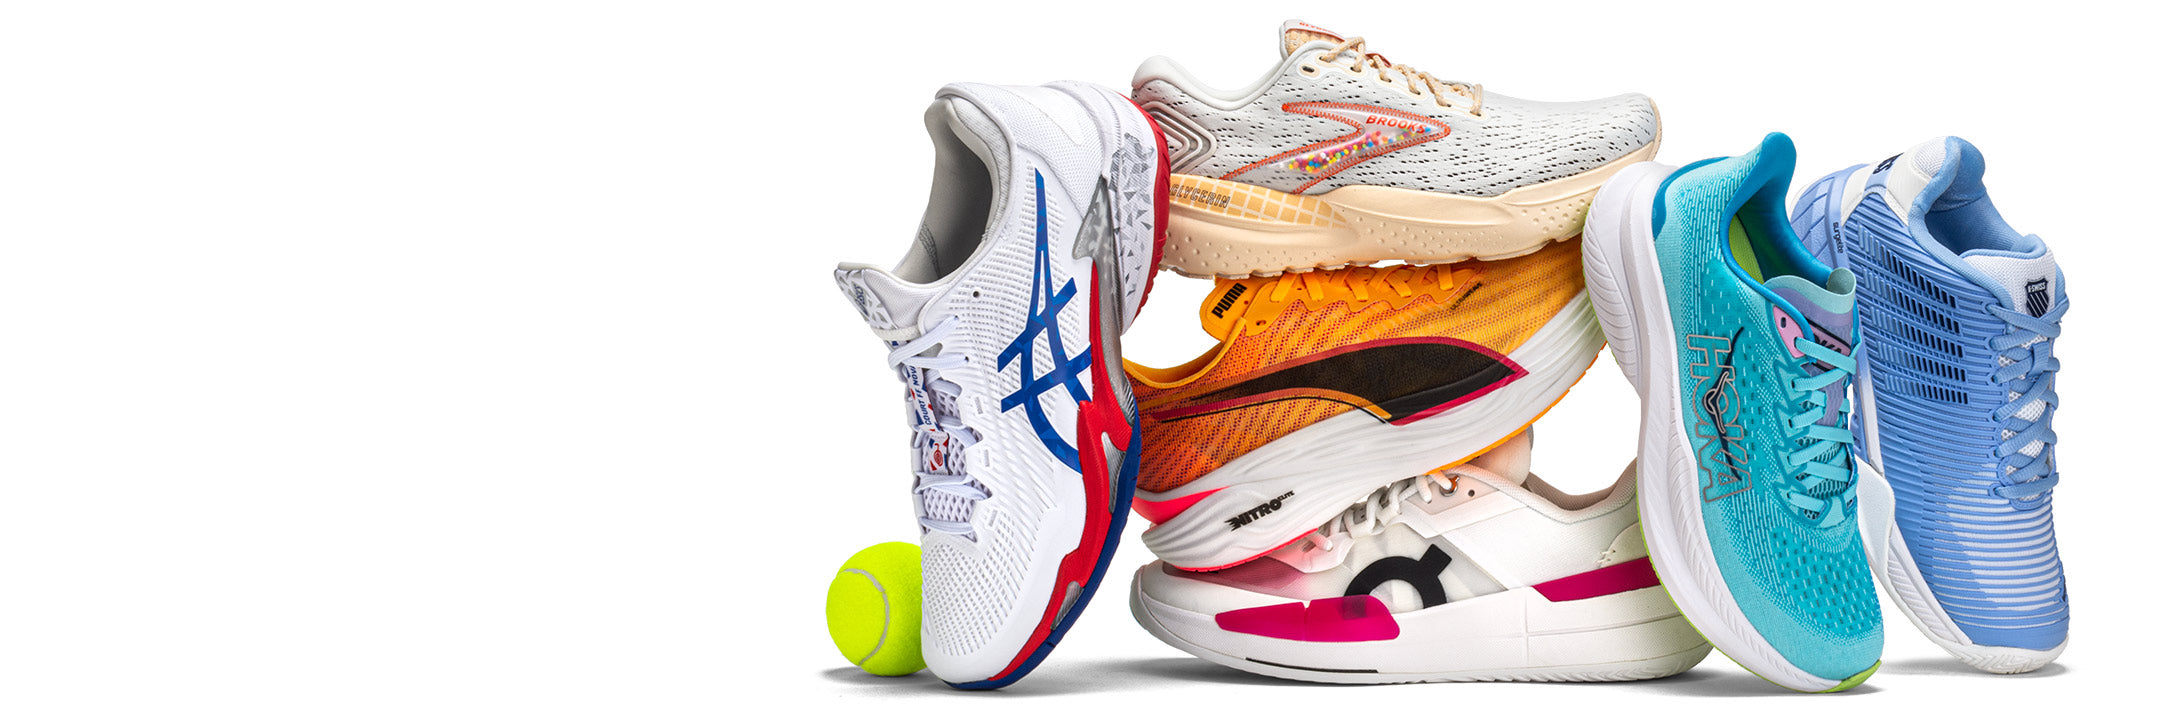 asics brooks puma onrunning hoka kswiss tennis running shoes desktop hero